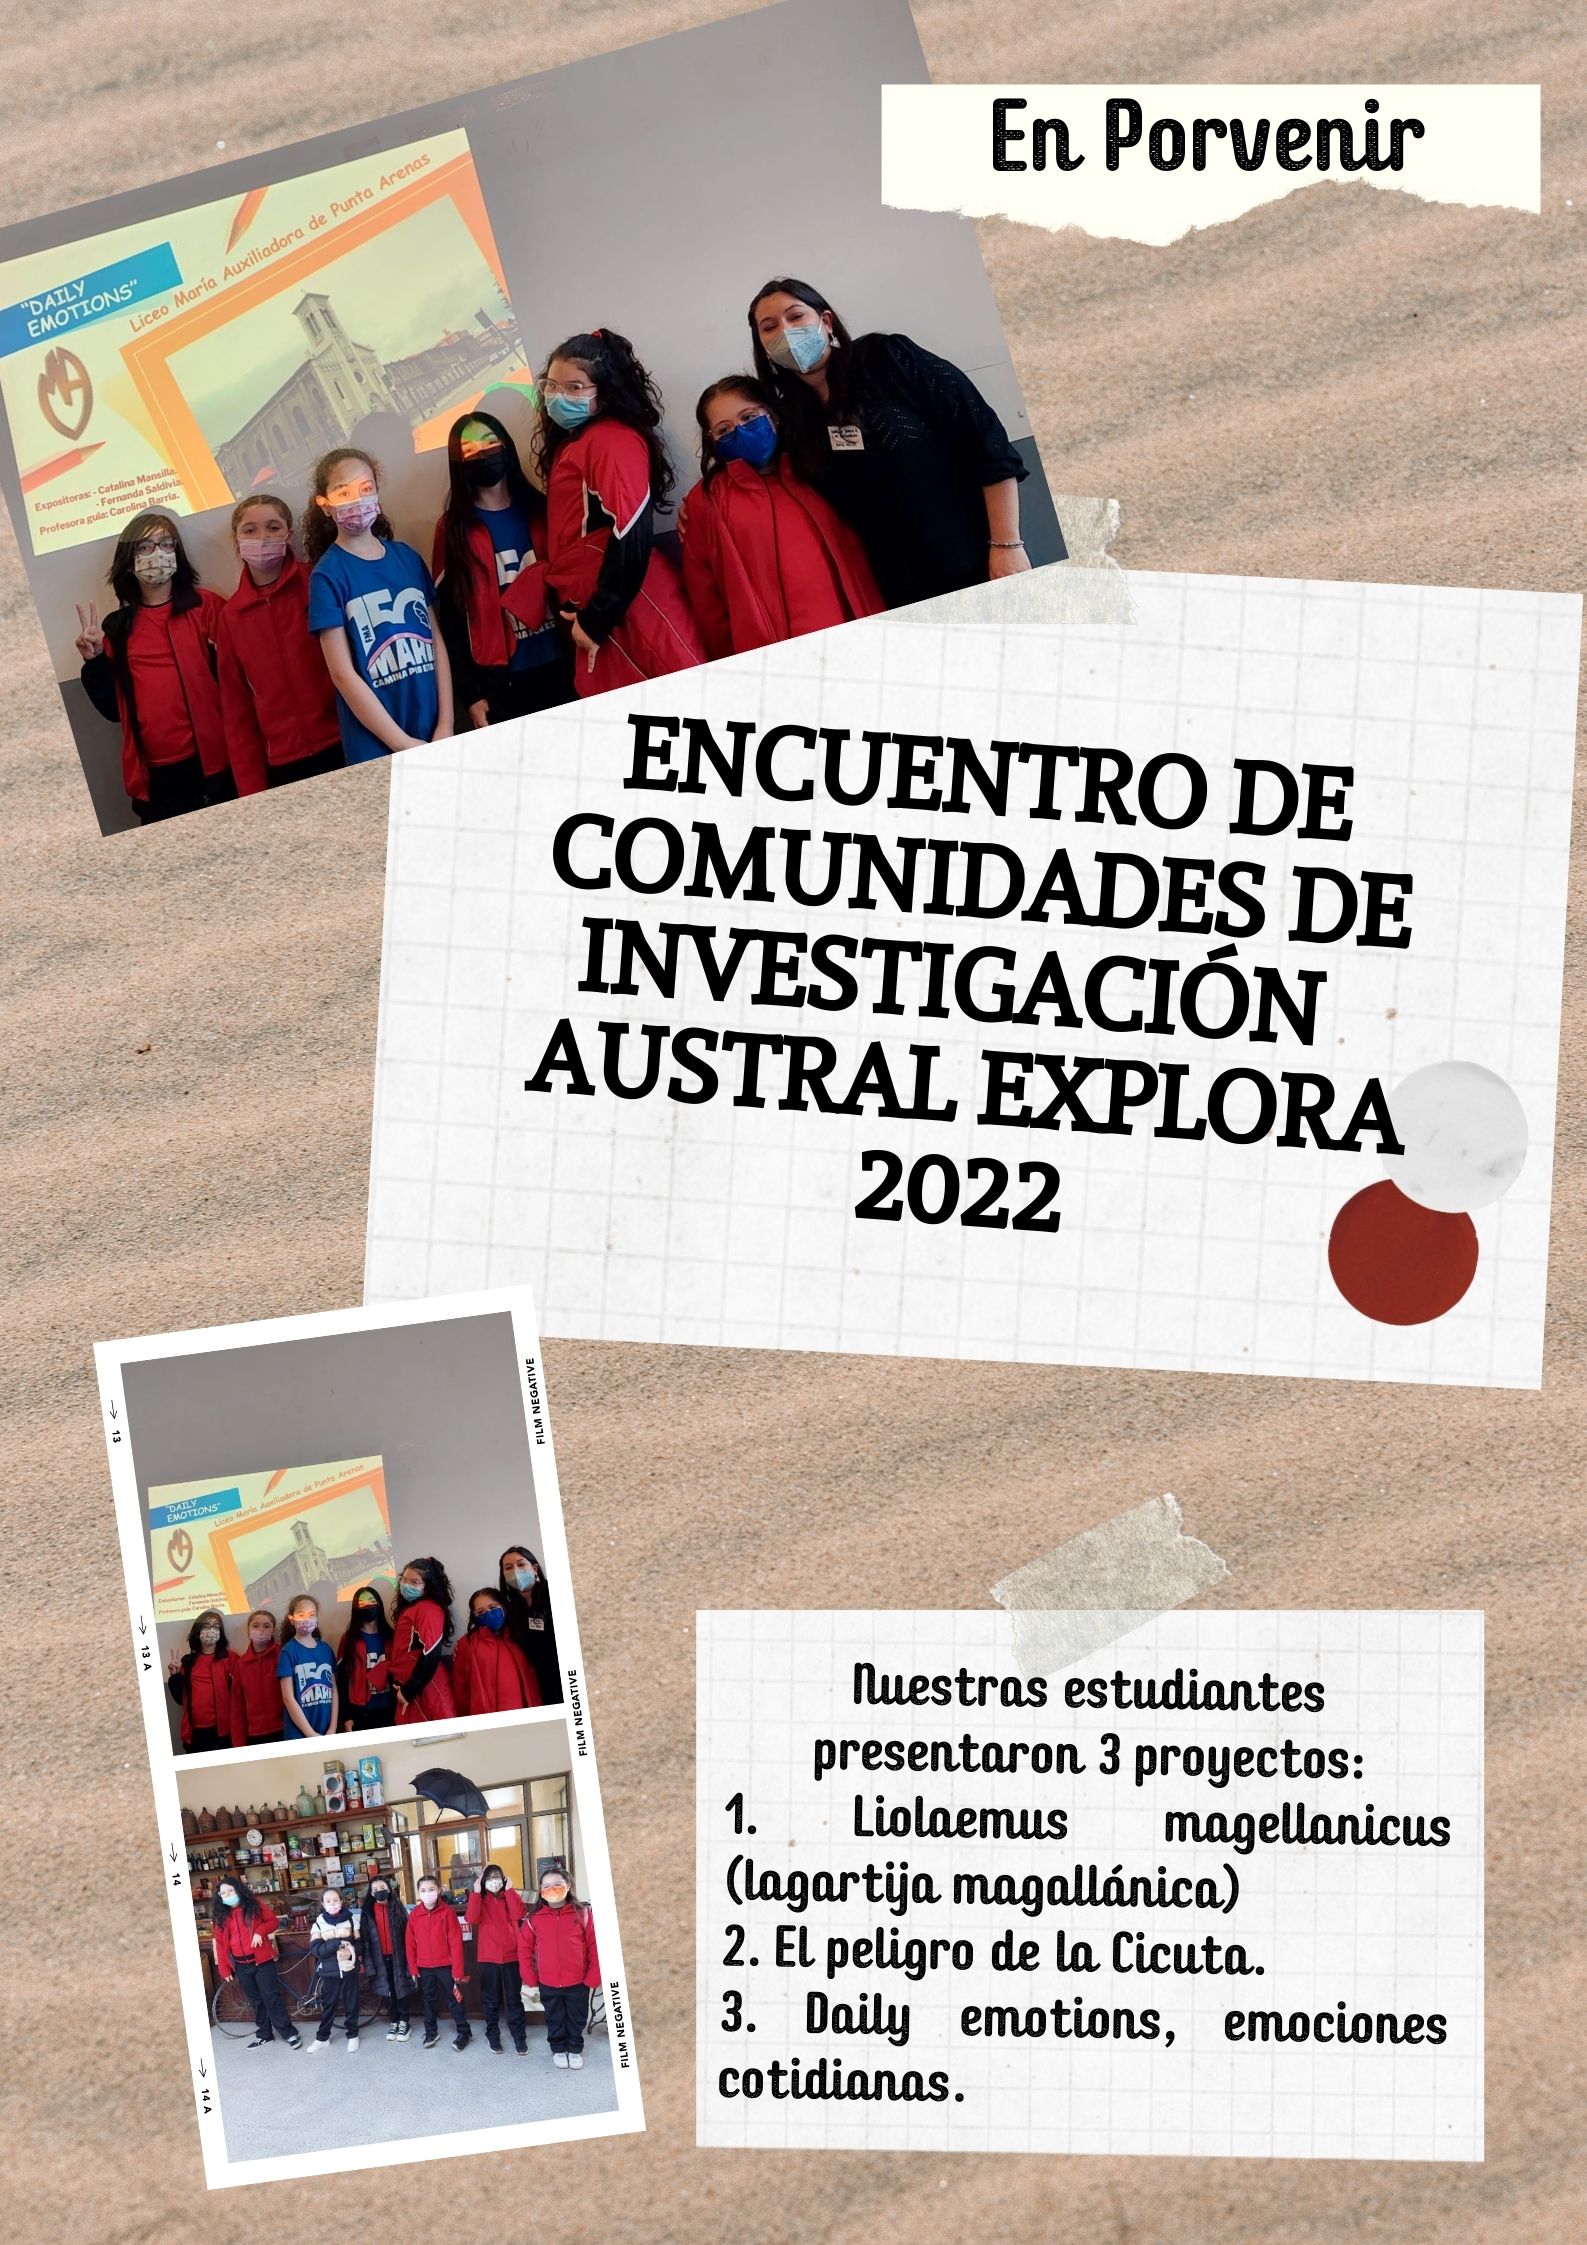 Encuentro_de_comunidades_de_investigación_austral_explora_2022_1.jpg